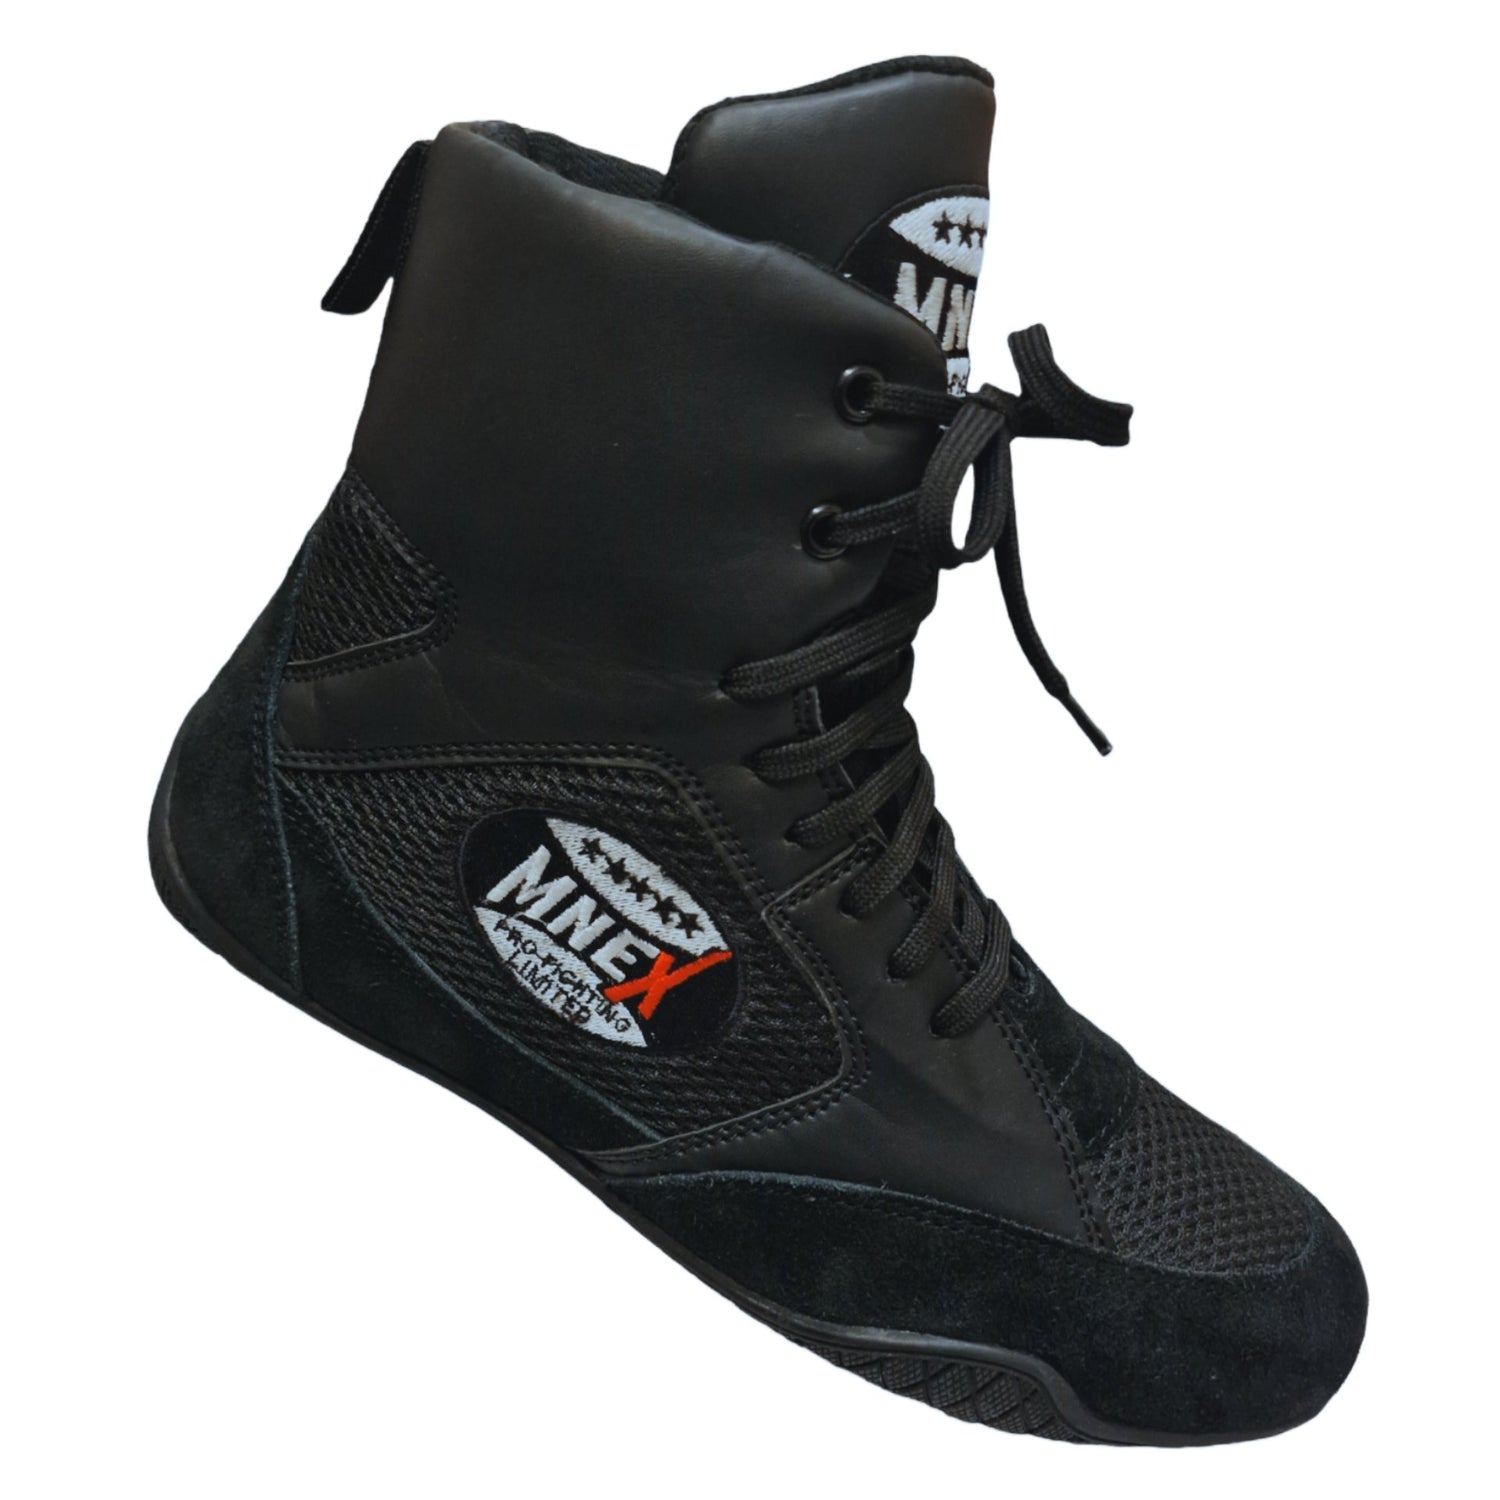 Our Shoes | Boxing Shoes| Wrestling Shoes| MMA Shoes Combat sport shoe ...